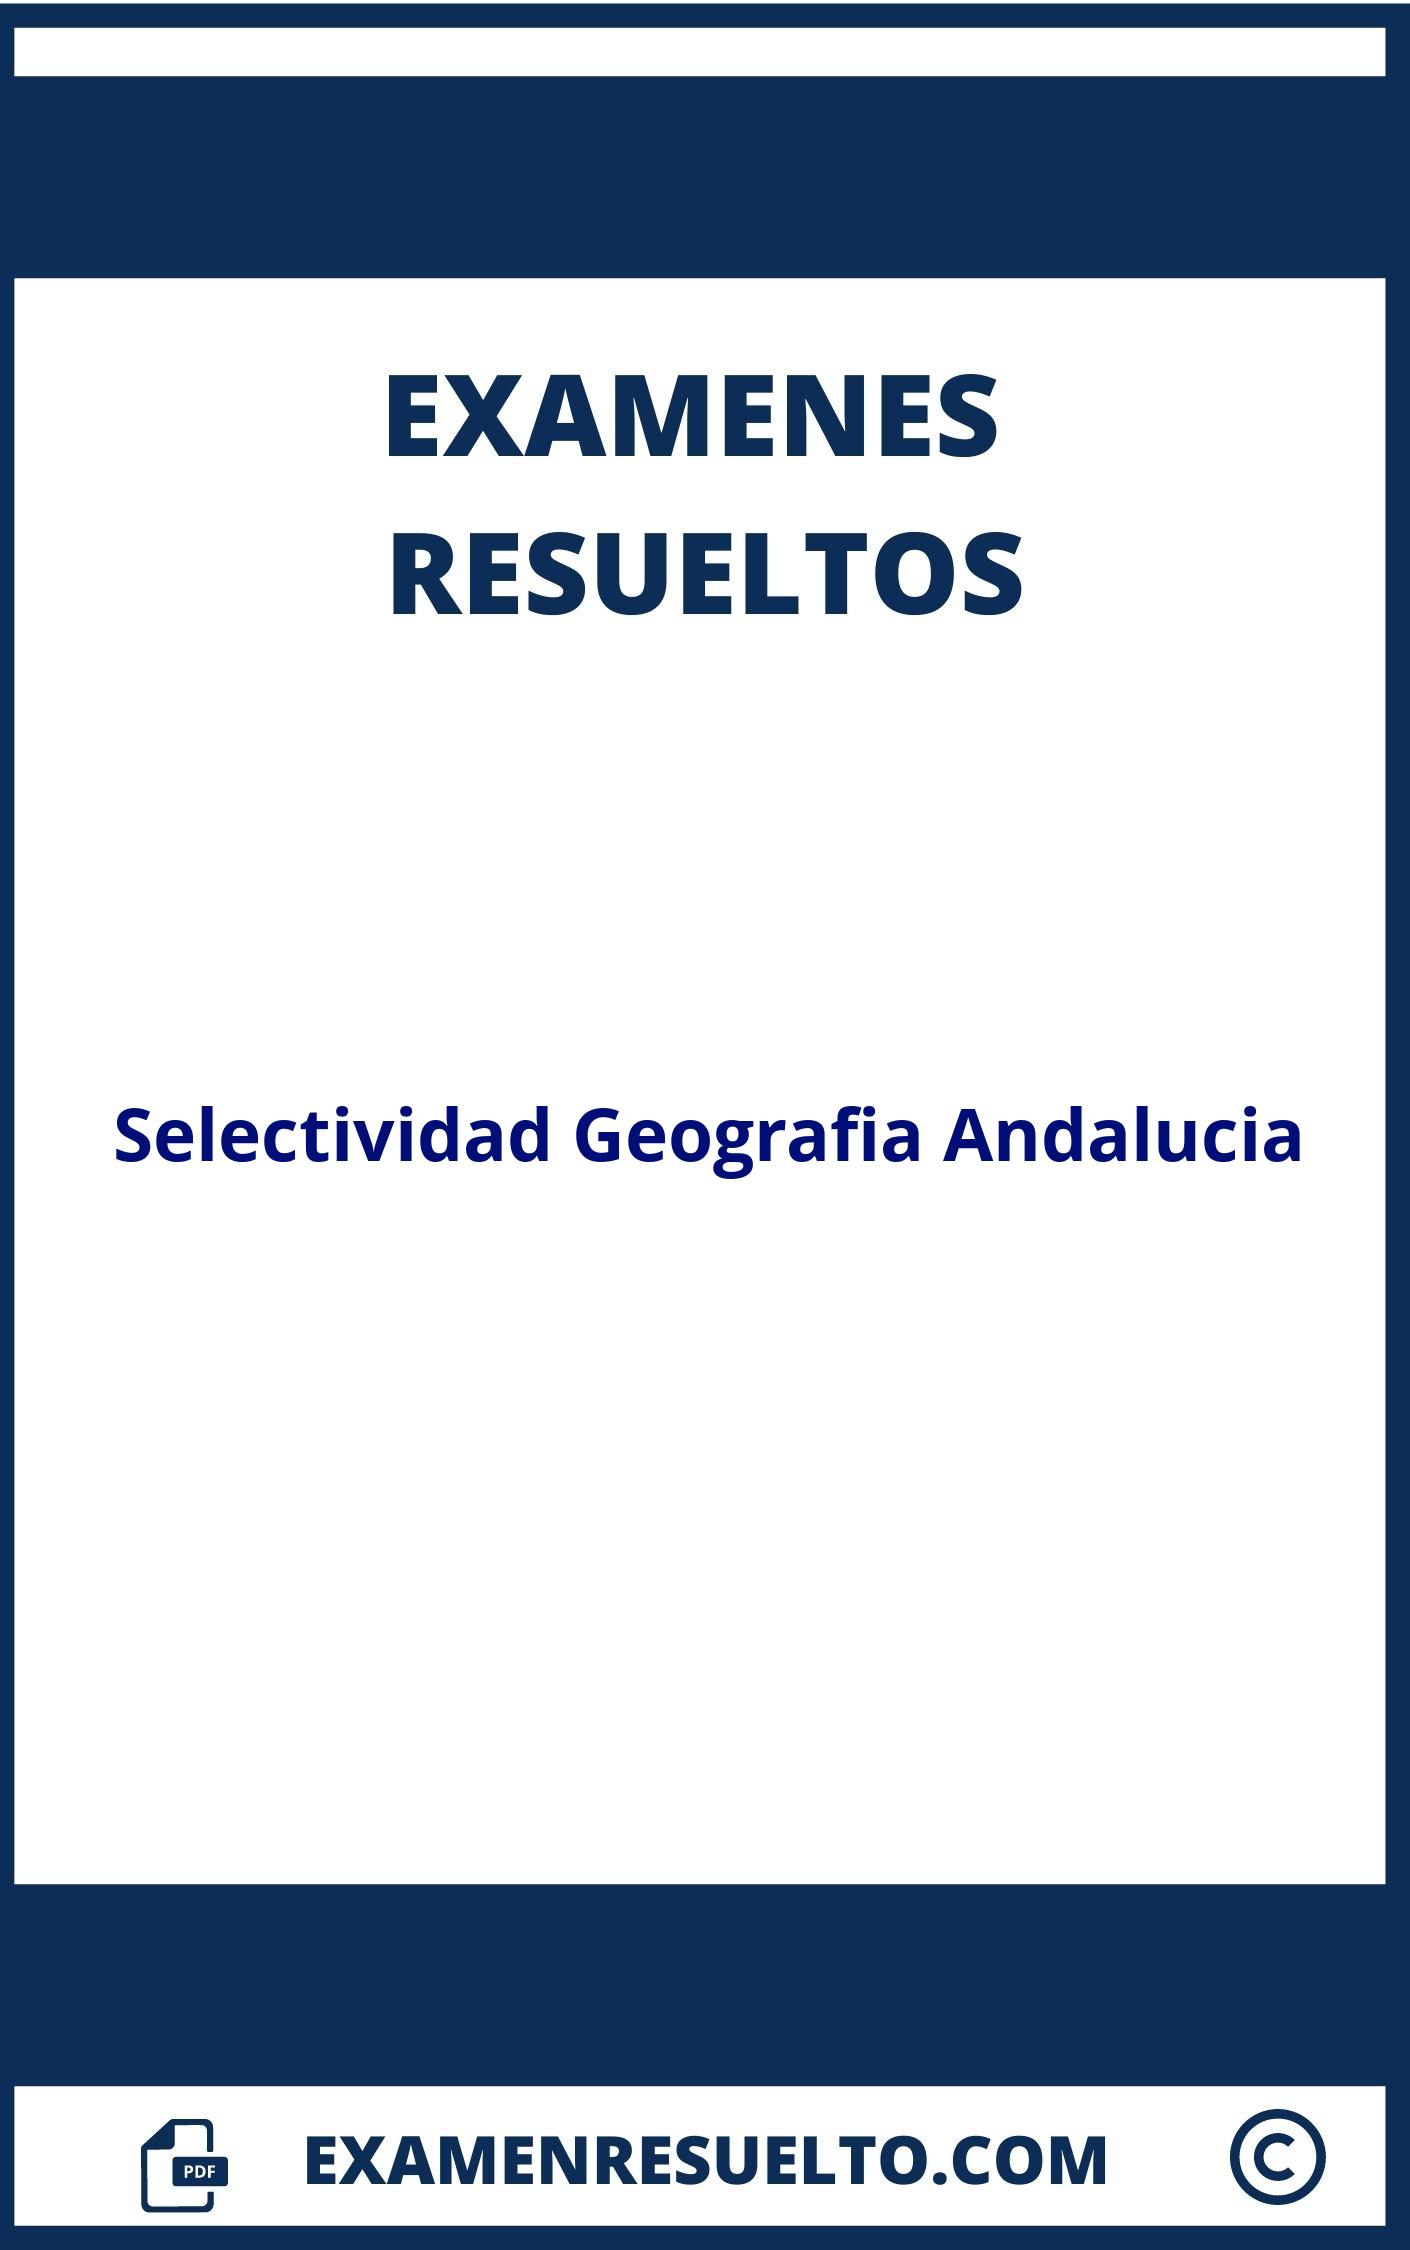 Examenes Selectividad Geografia Andalucia Resueltos